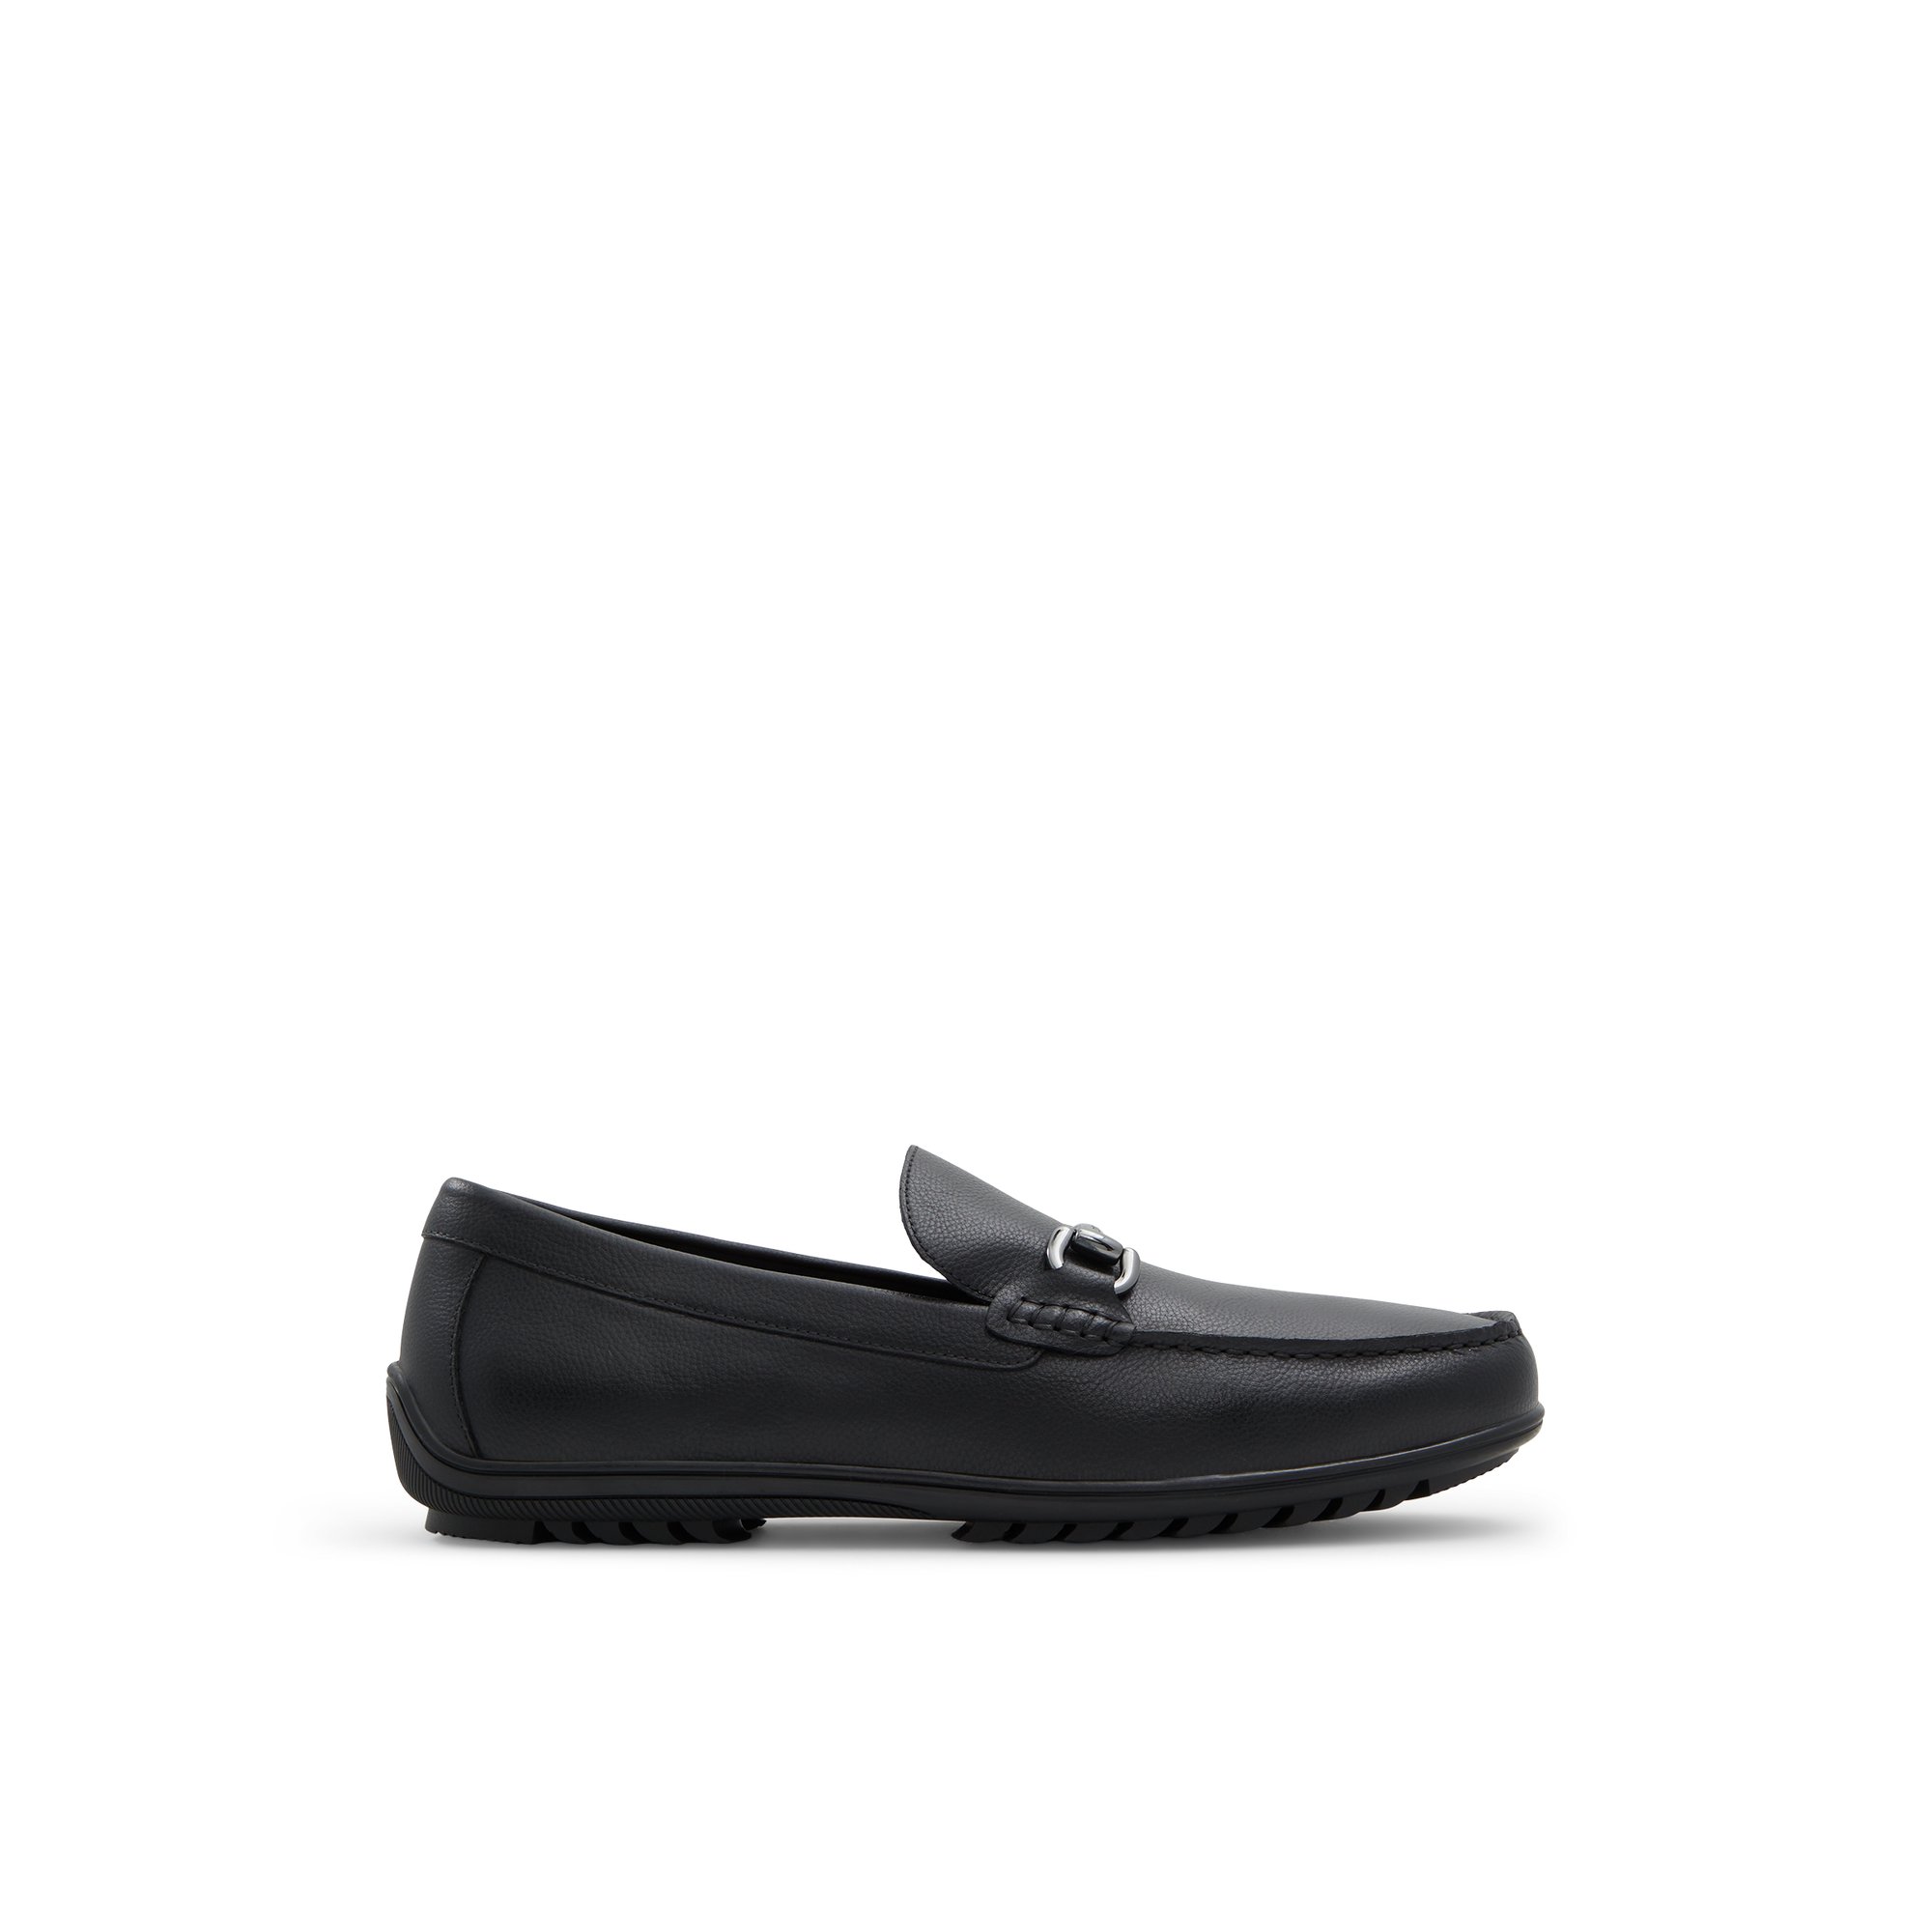 ALDO Evoke - Men's Casual Shoe - Black